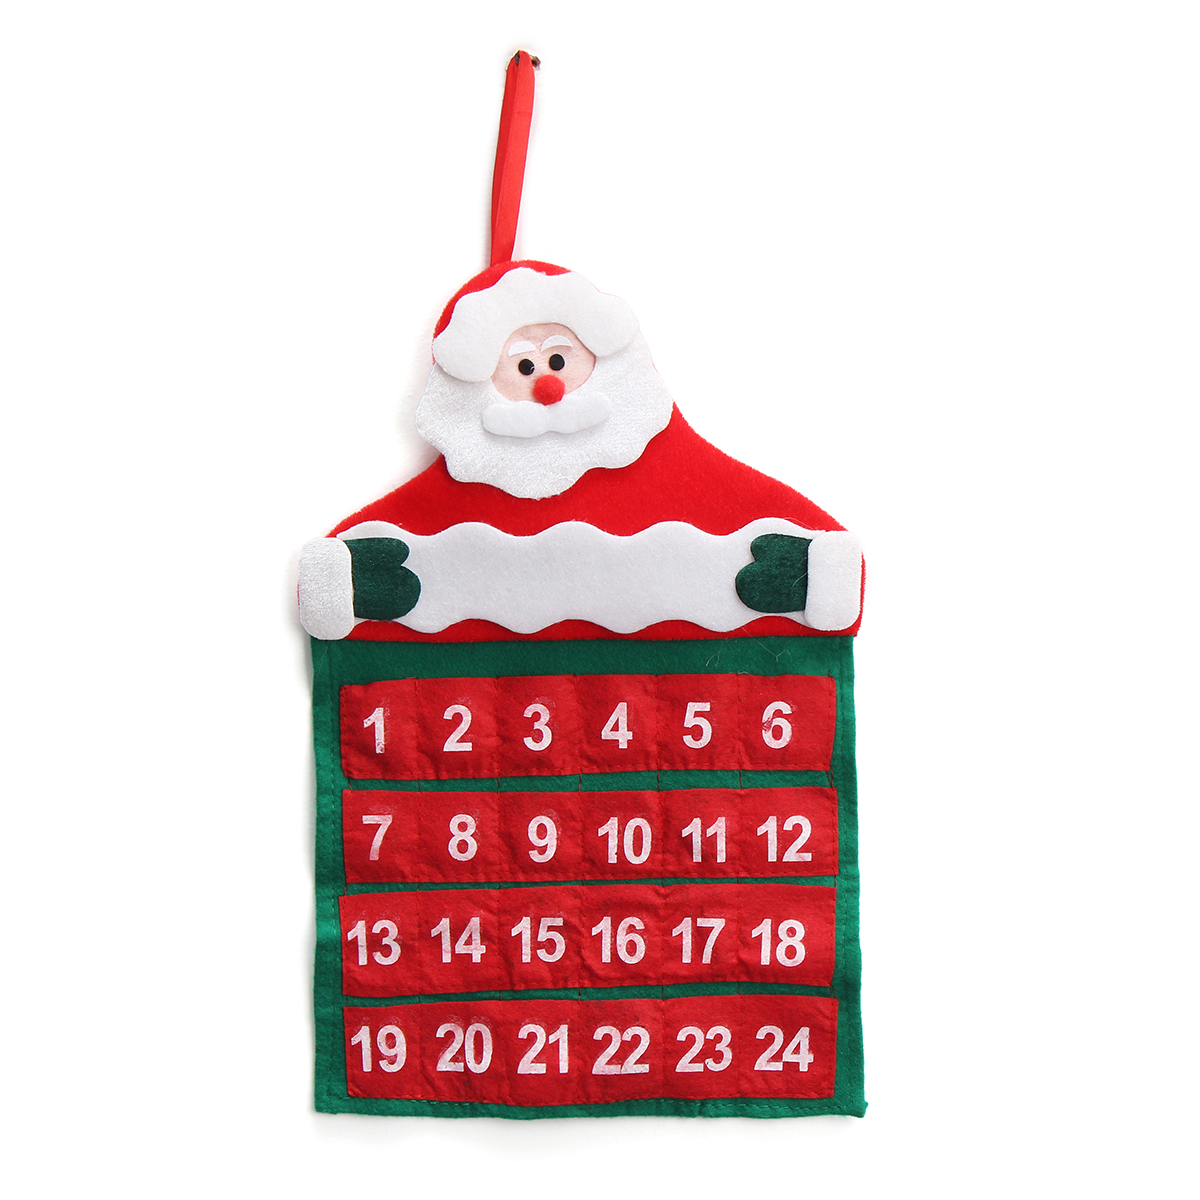 Felt-Christmas-Advent-Wall-Hanging-Calendar-Pockets-Santa-Reindeer-Snowman-Decorations-1462546-2